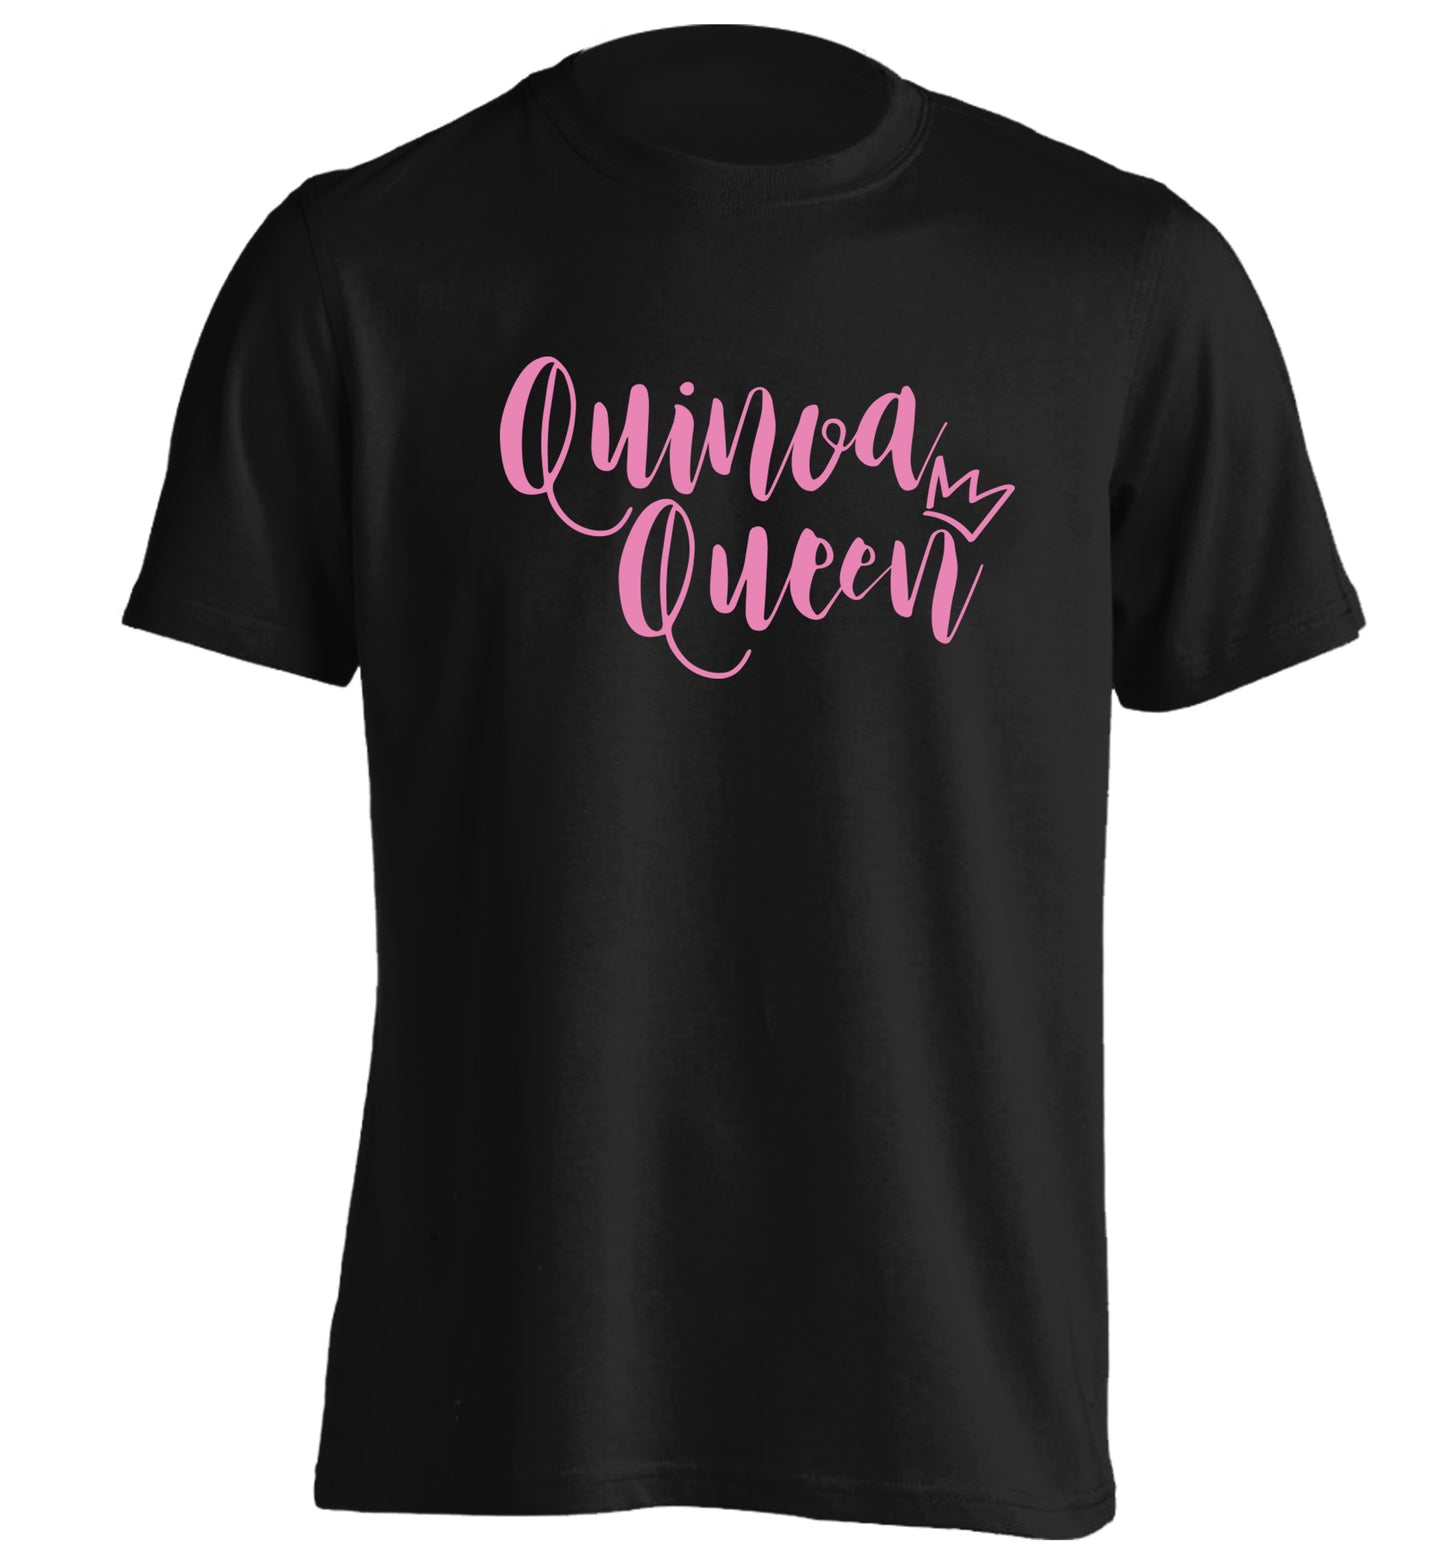 Quinoa Queen adults unisex black Tshirt 2XL